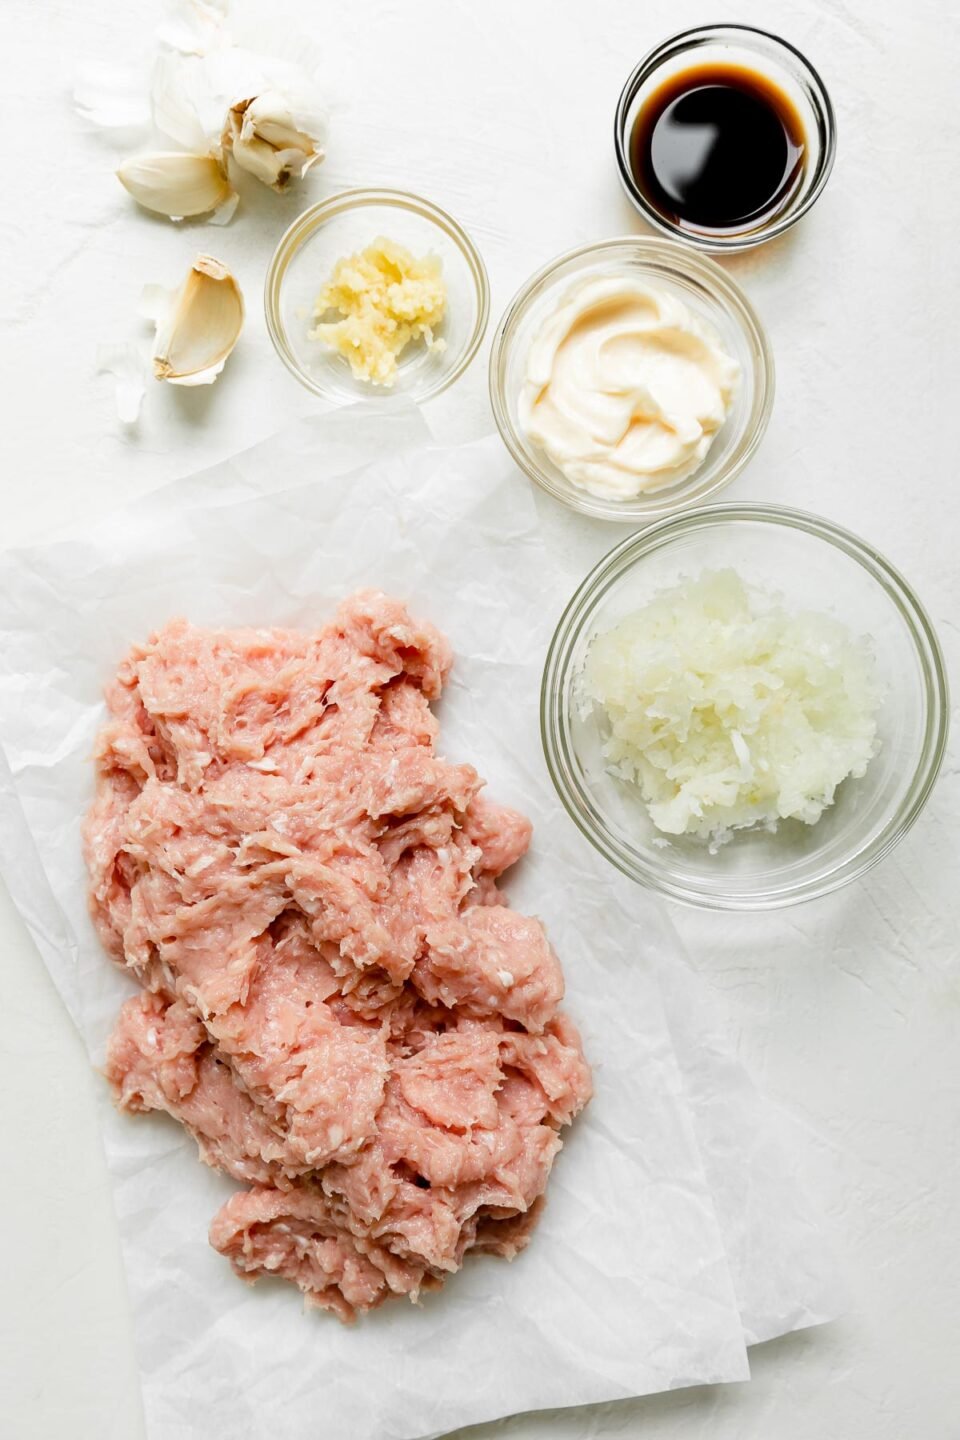 Ground chicken, yellow onion, garlic, mayonnaise, Worcestershire sauce arranged on a creamy white textured surface.